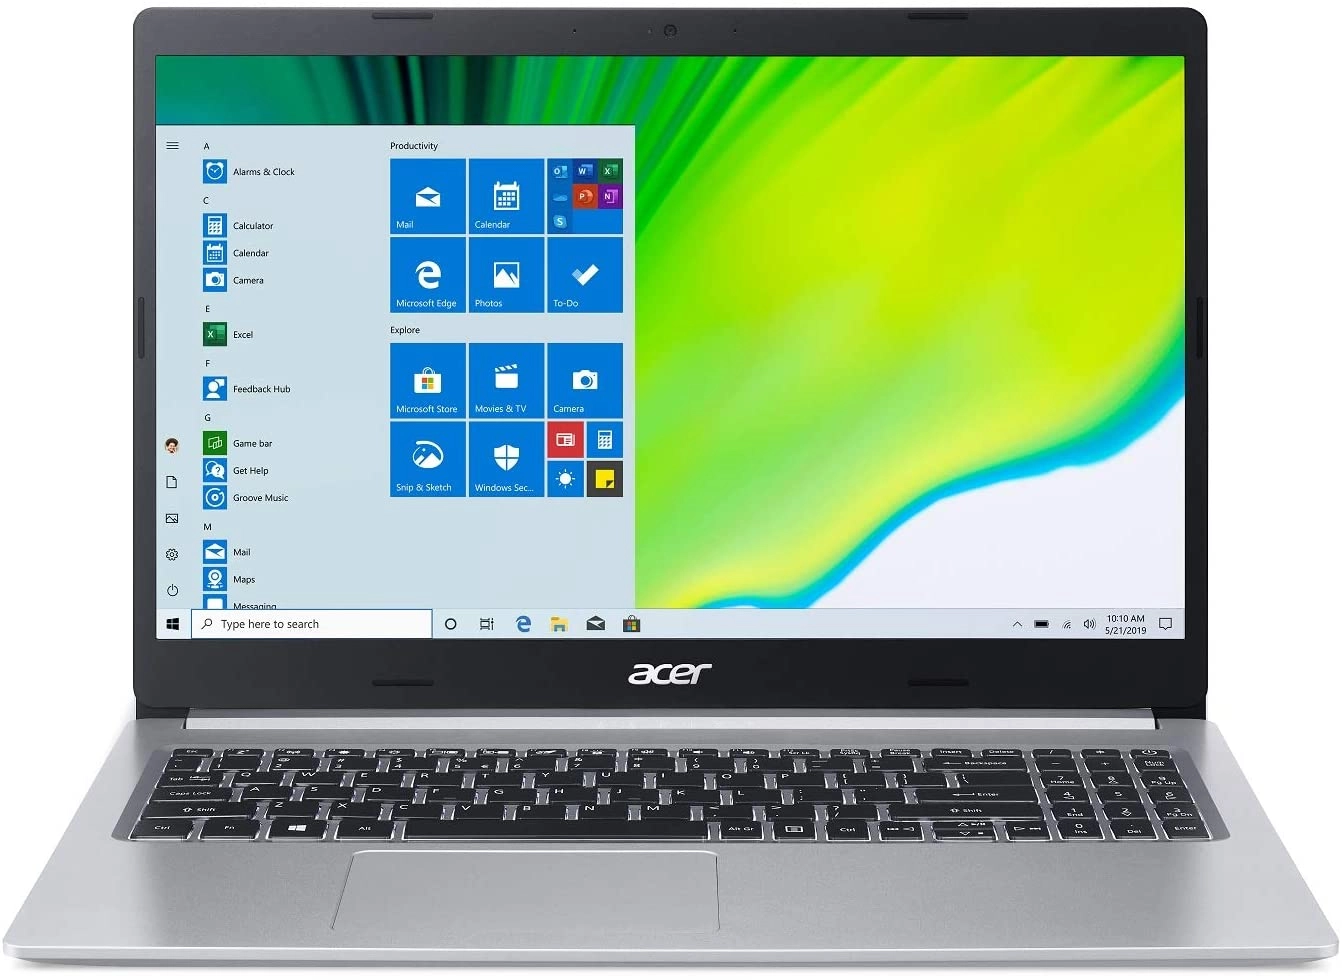 Acer A515-44-R41B laptop image